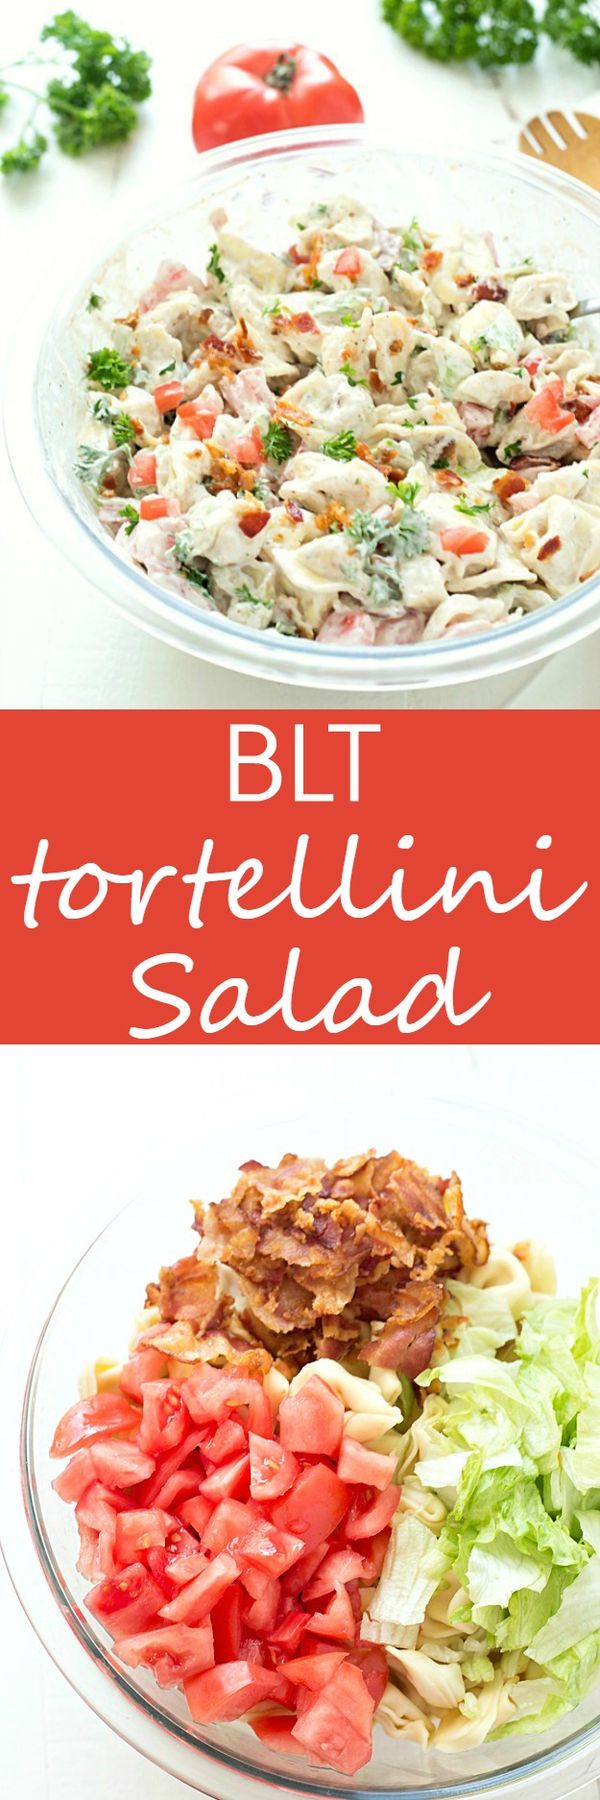 BLT Tortellini Salad